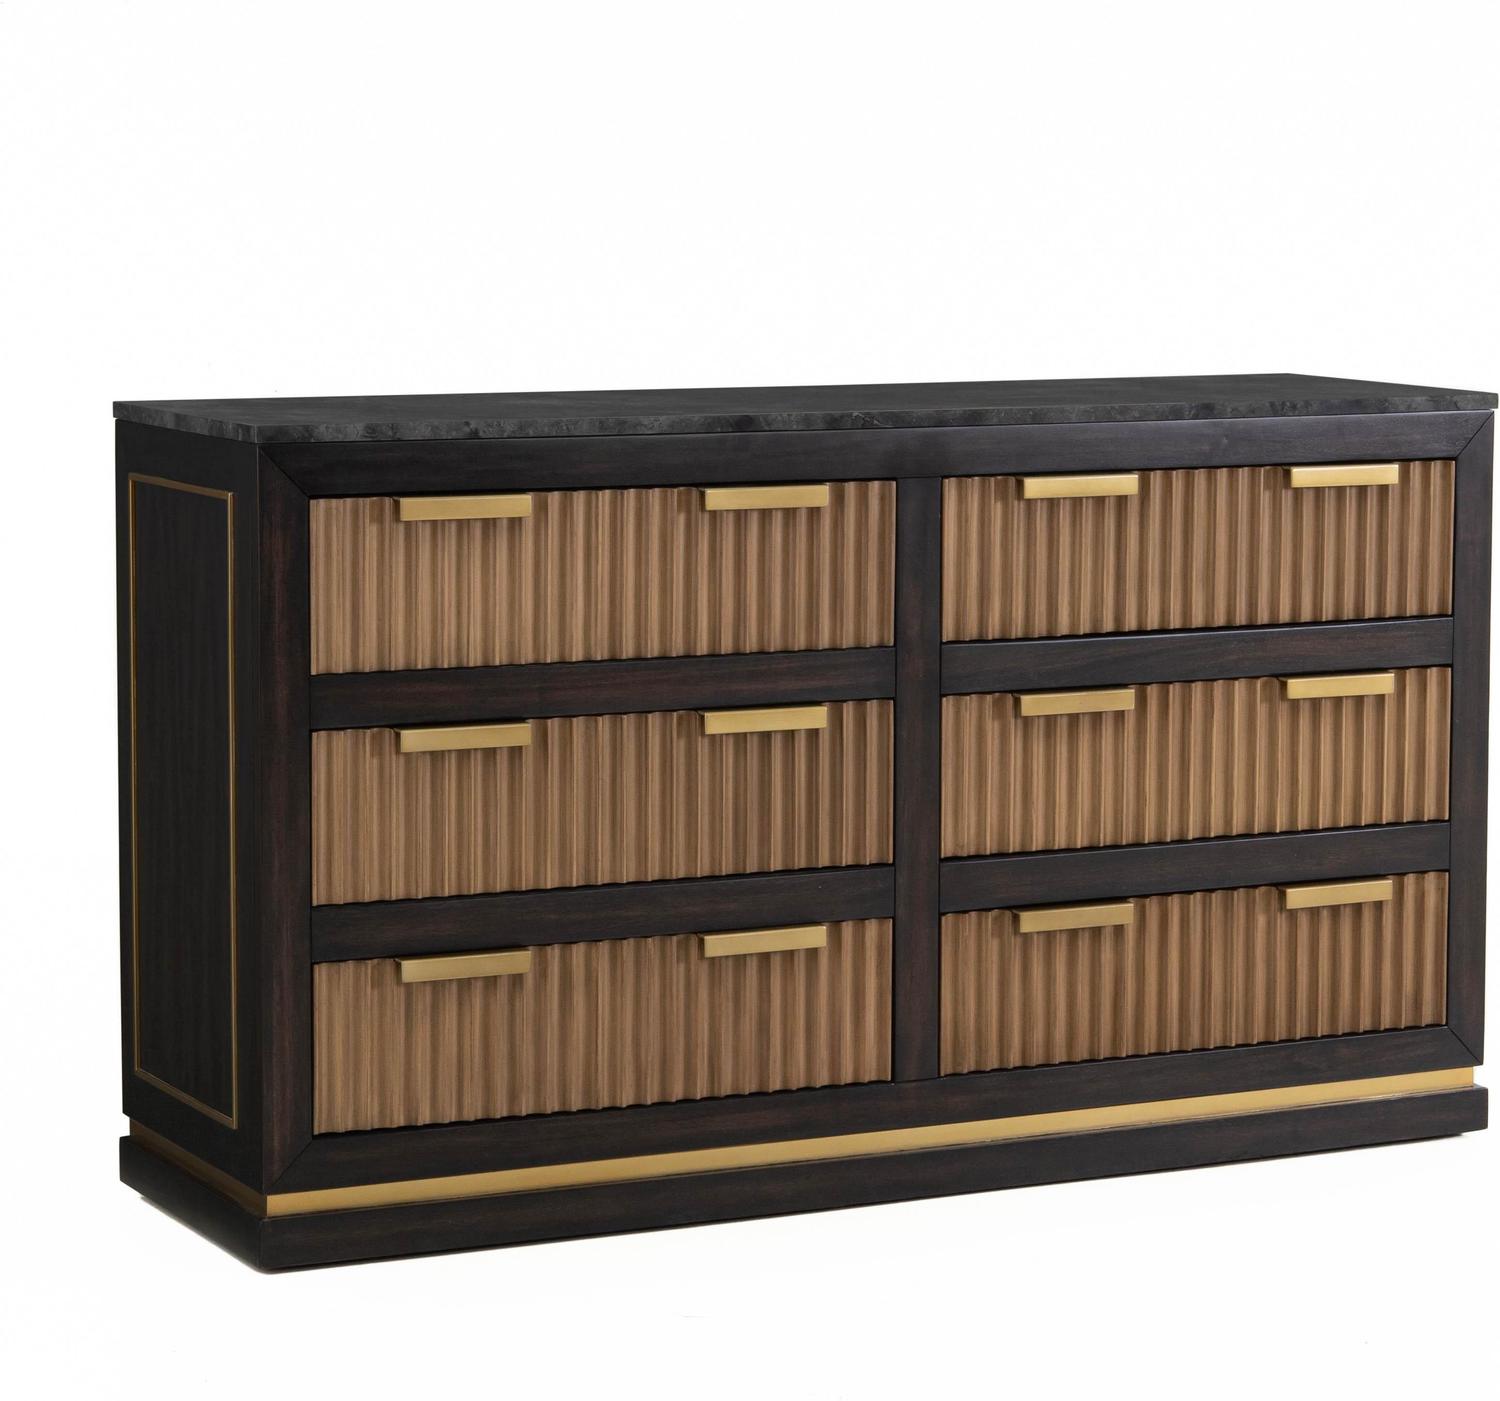 real wood bedroom dresser Contemporary Design Furniture Dressers Espresso,Walnut